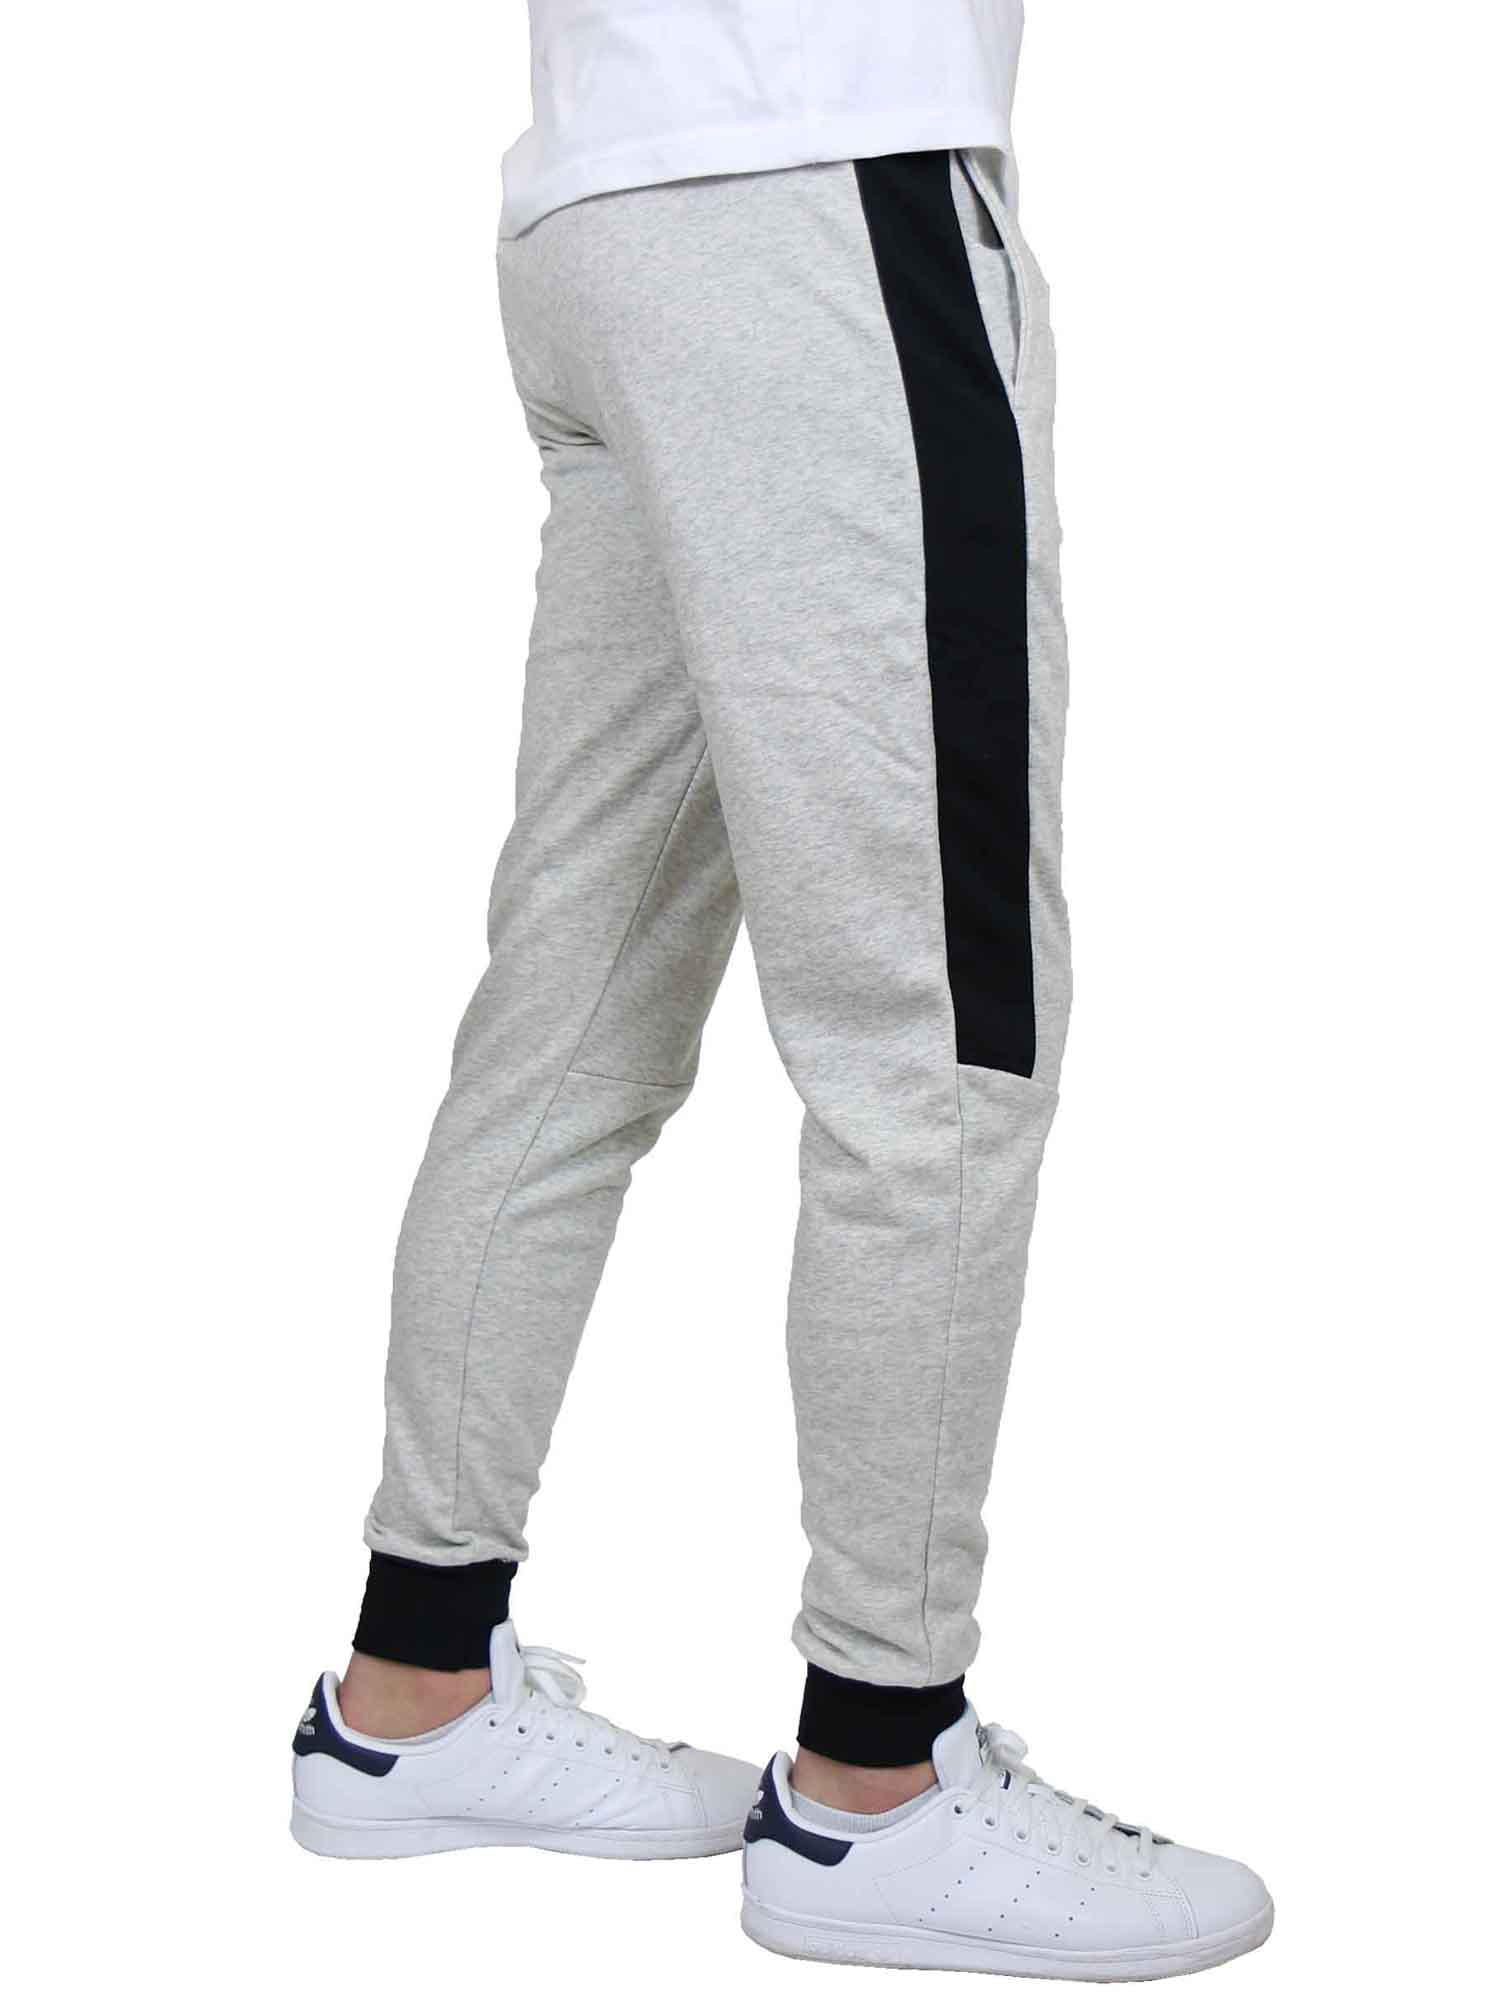 GBH - Men's Slim-Fit Jogger Sweatpants With Trim - Walmart.com ...